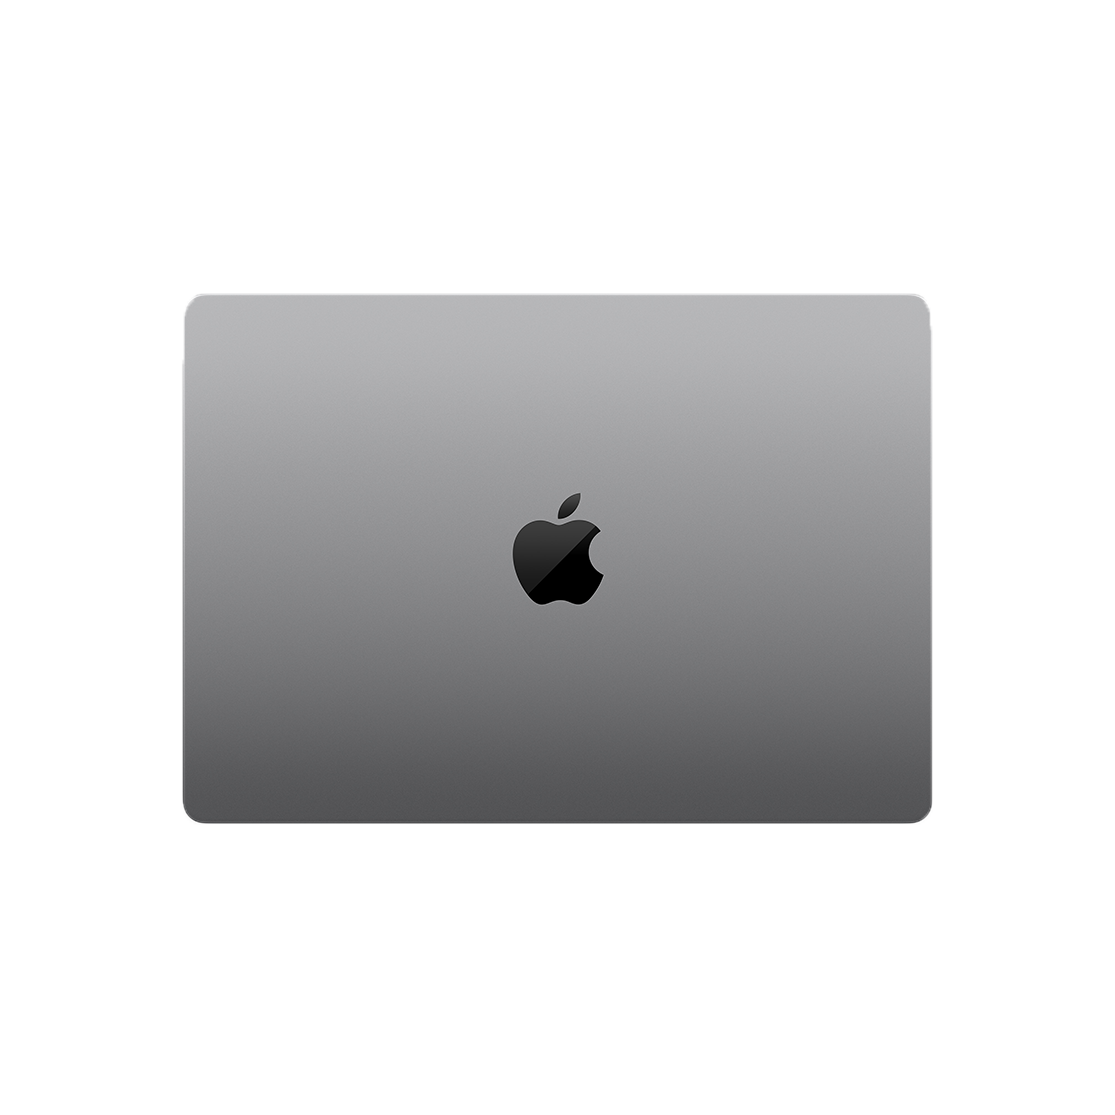 minimalistic elegance defines MacBook Pro's back